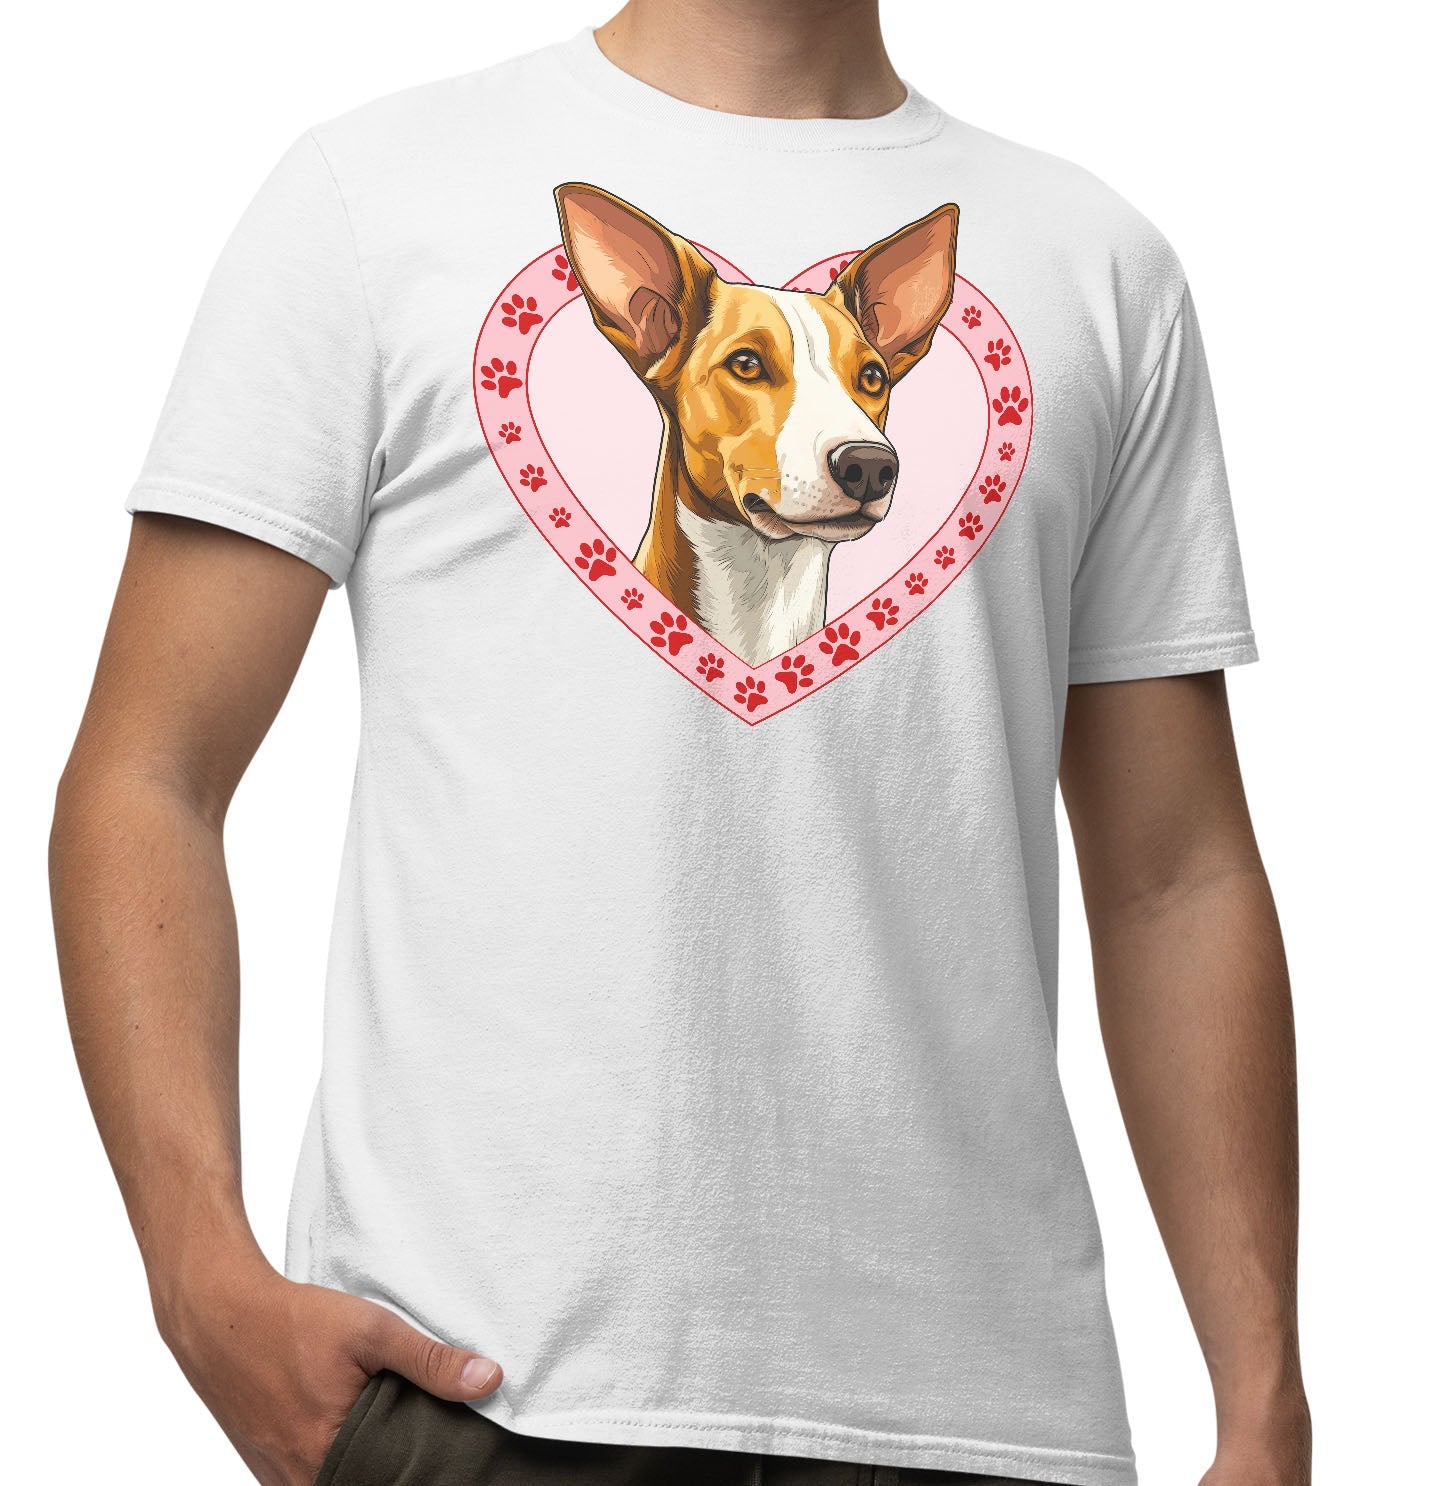 Ibizan Hound Illustration In Heart - Adult Unisex T-Shirt